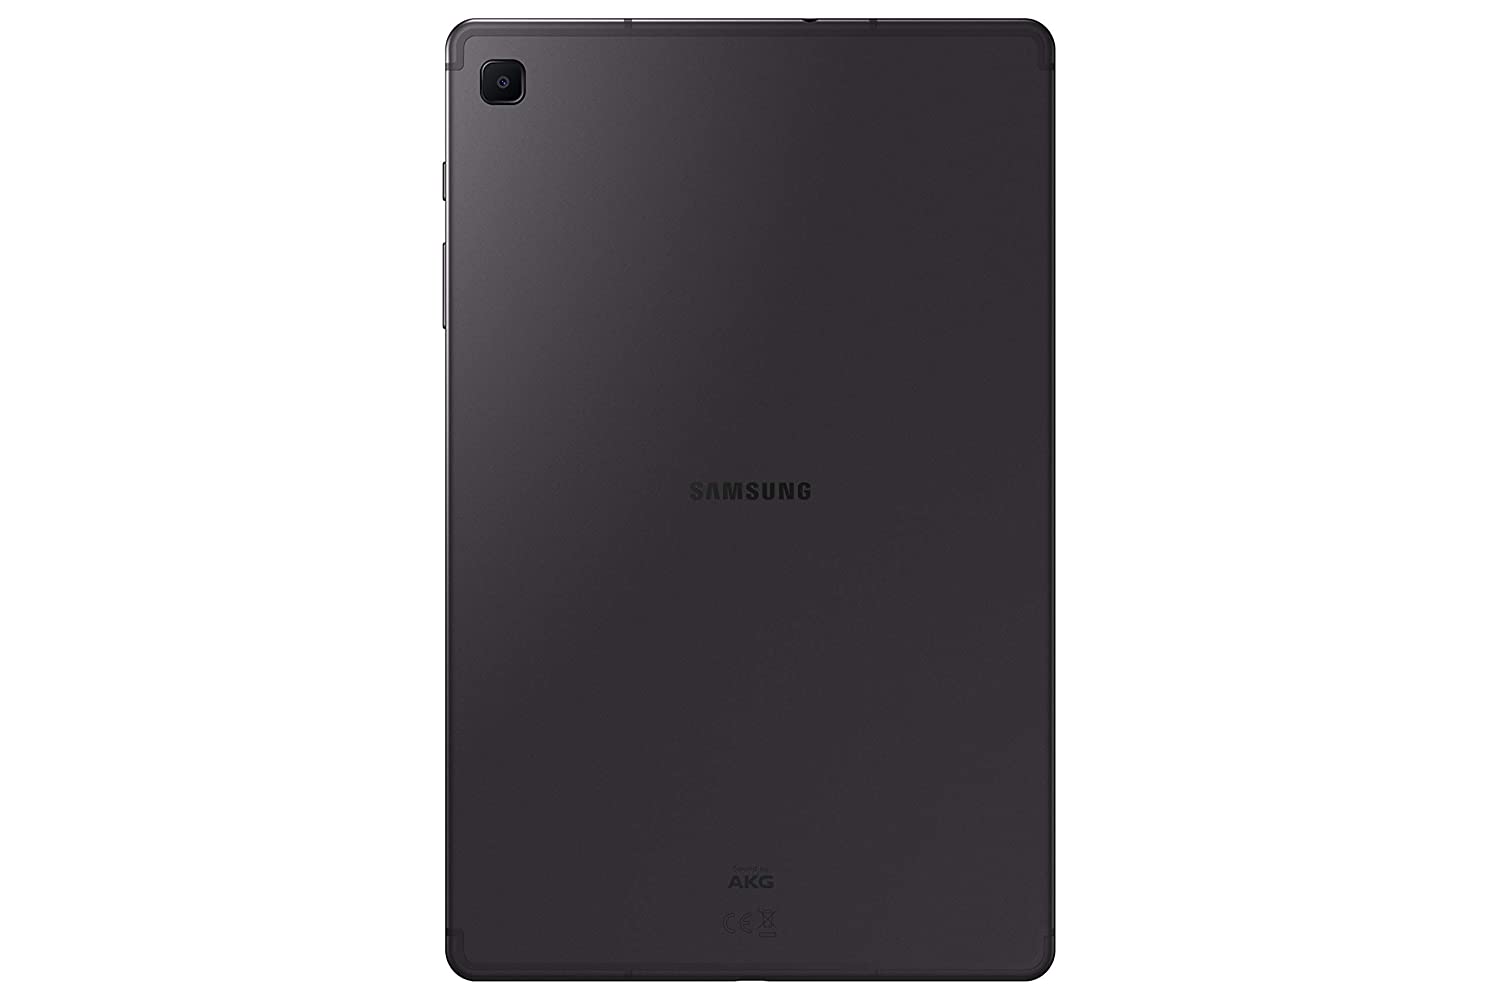 Samsung Galaxy Tab S6 Lite 26.31 cm (10.4 inch), S-Pen in Box, Slim and Light, Dolby Atmos Sound, 4 GB RAM, 64 GB ROM, Wi-Fi Tablet, Gray - Mahajan Electronics Online